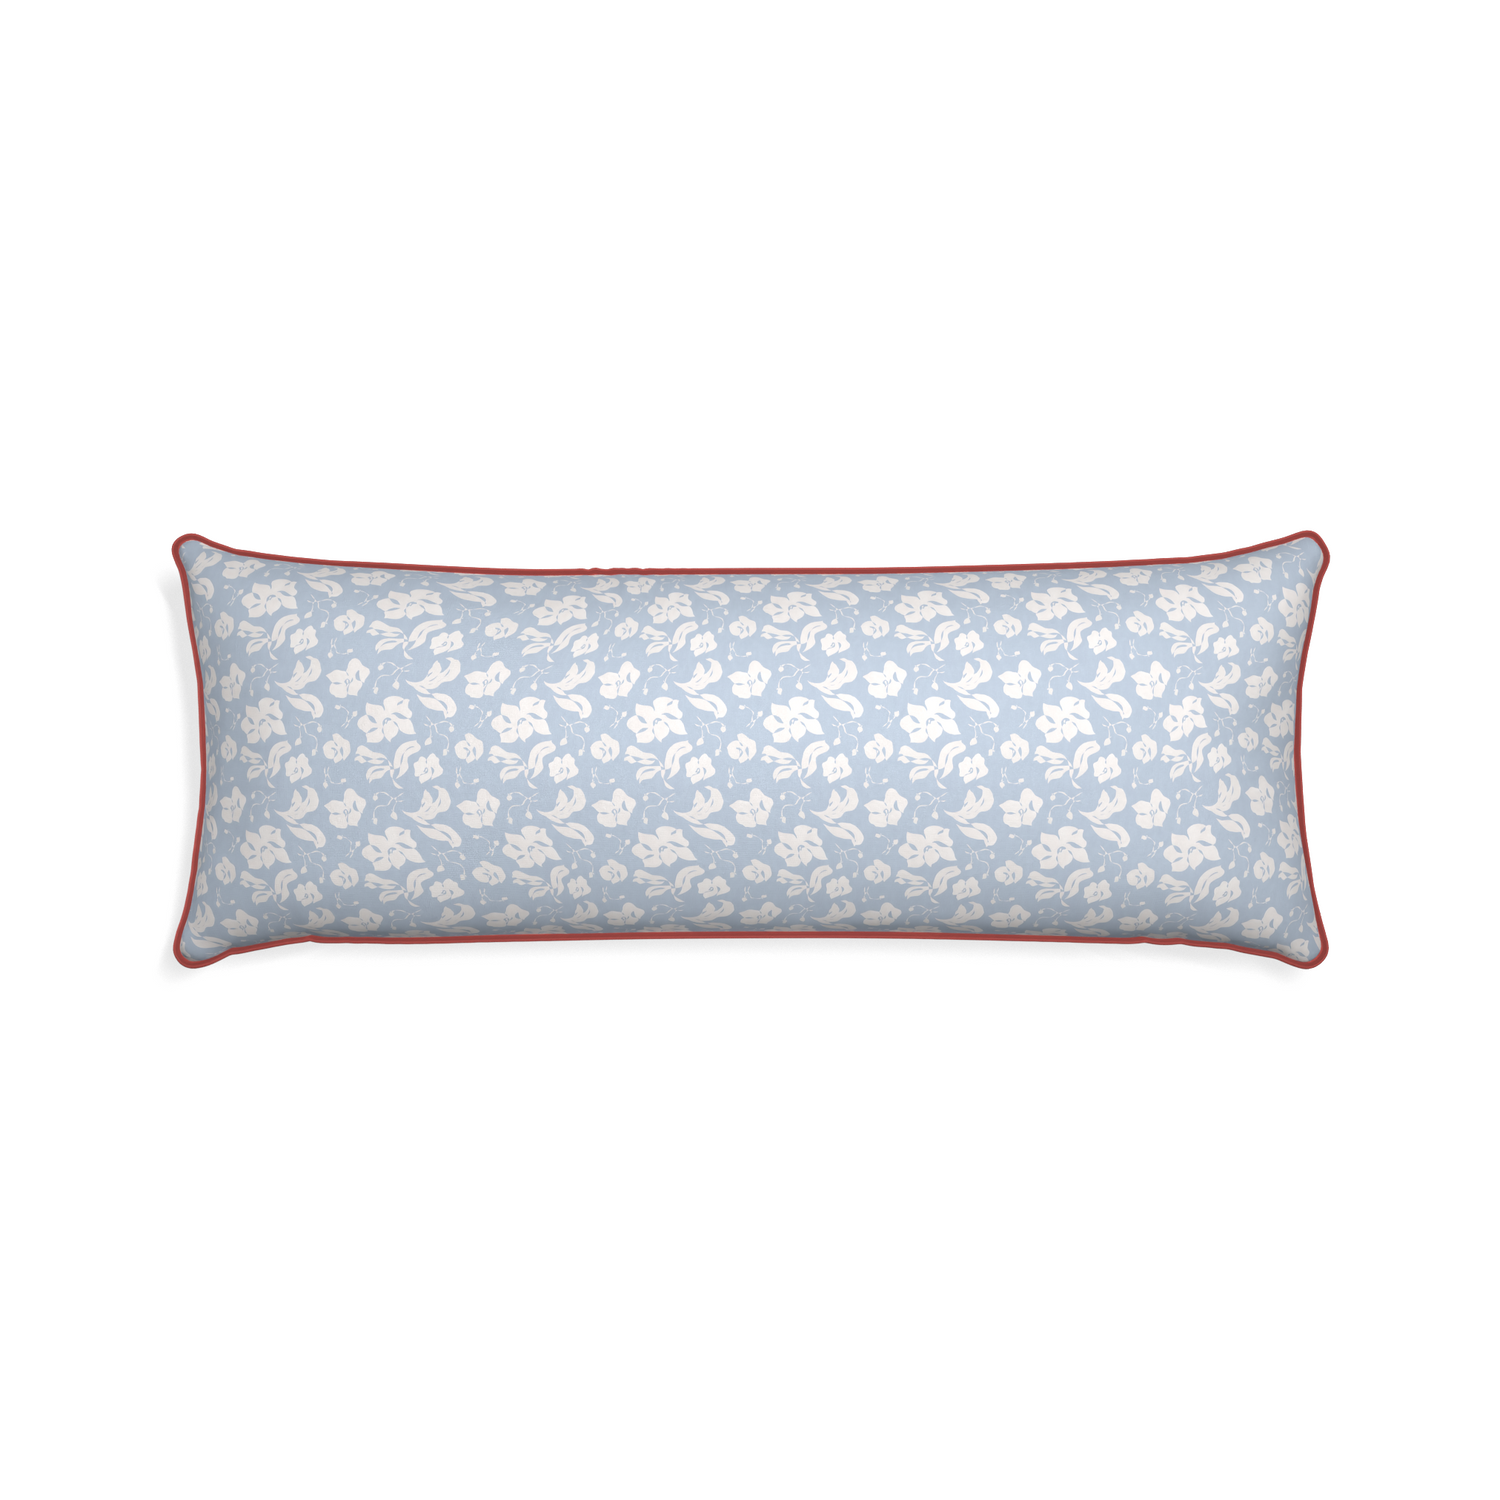 Xl-lumbar georgia custom pillow with c piping on white background